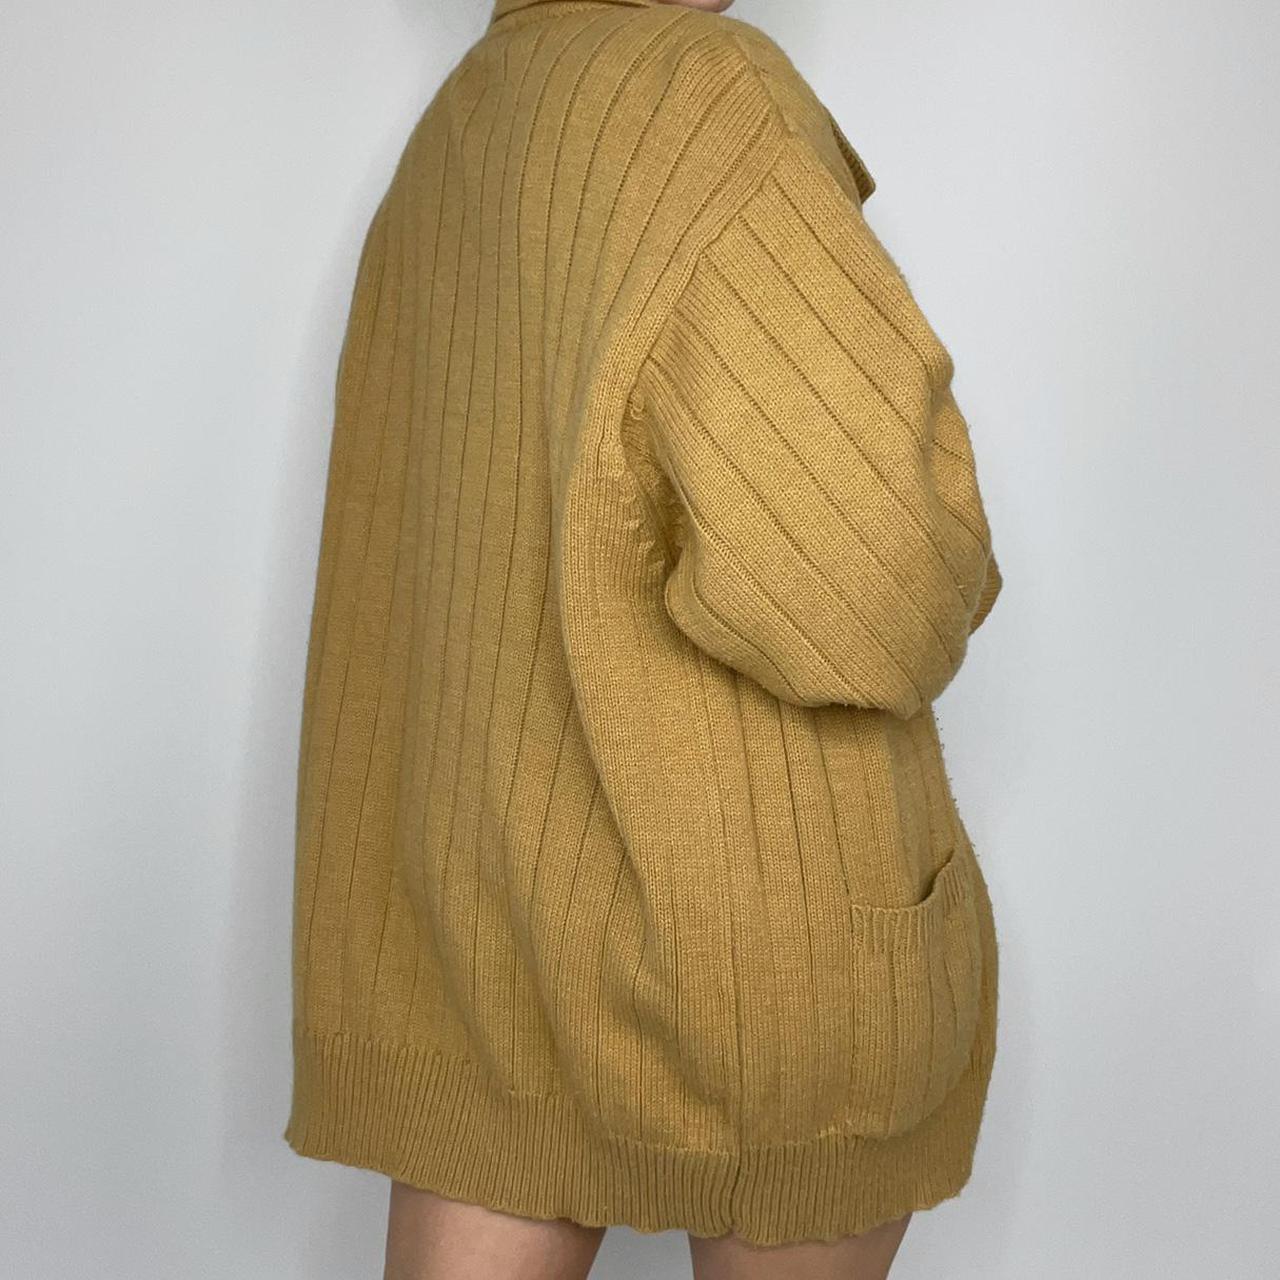 Product Image 3 - Knit chunky cardigan 🧸

90s mustard